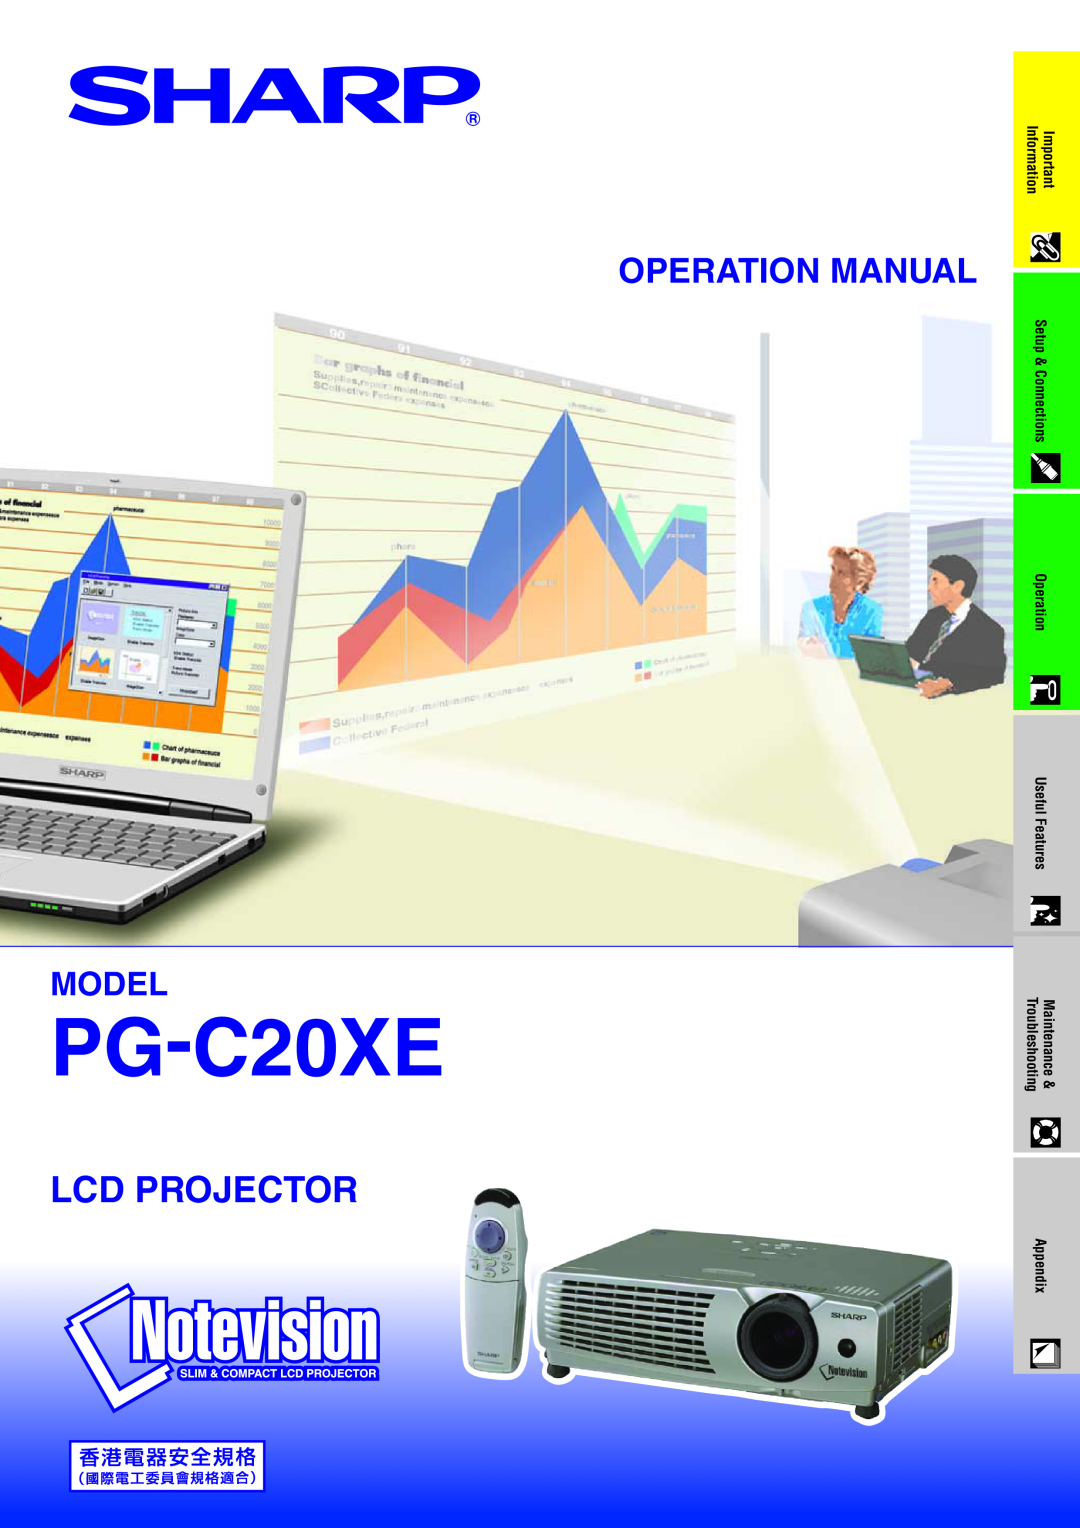 Sharp PG-C20XE appendix Lcd Projector, Model, Setup, Information, Troubleshooting, Maintenance 